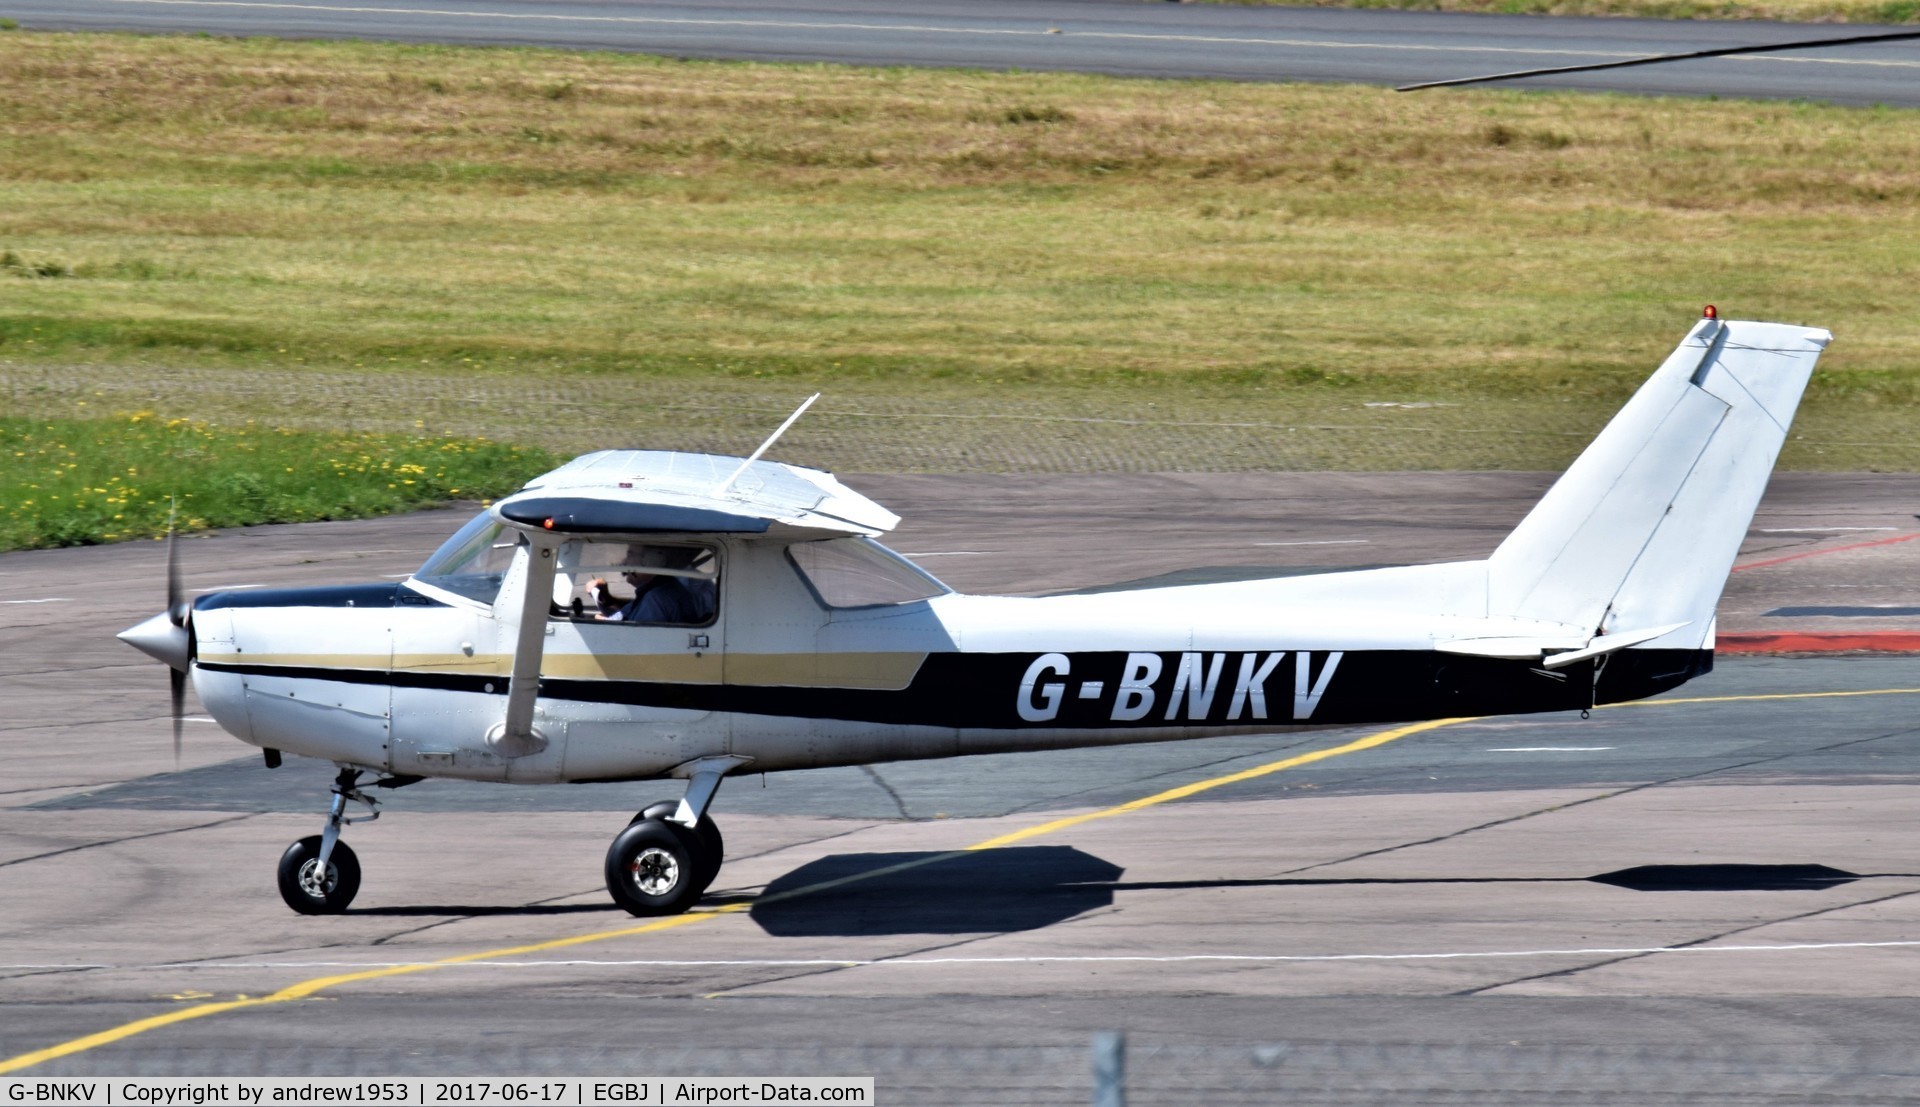 G-BNKV, 1979 Cessna 152 C/N 152-83079, G-BNKV at Gloucestershire Airport.